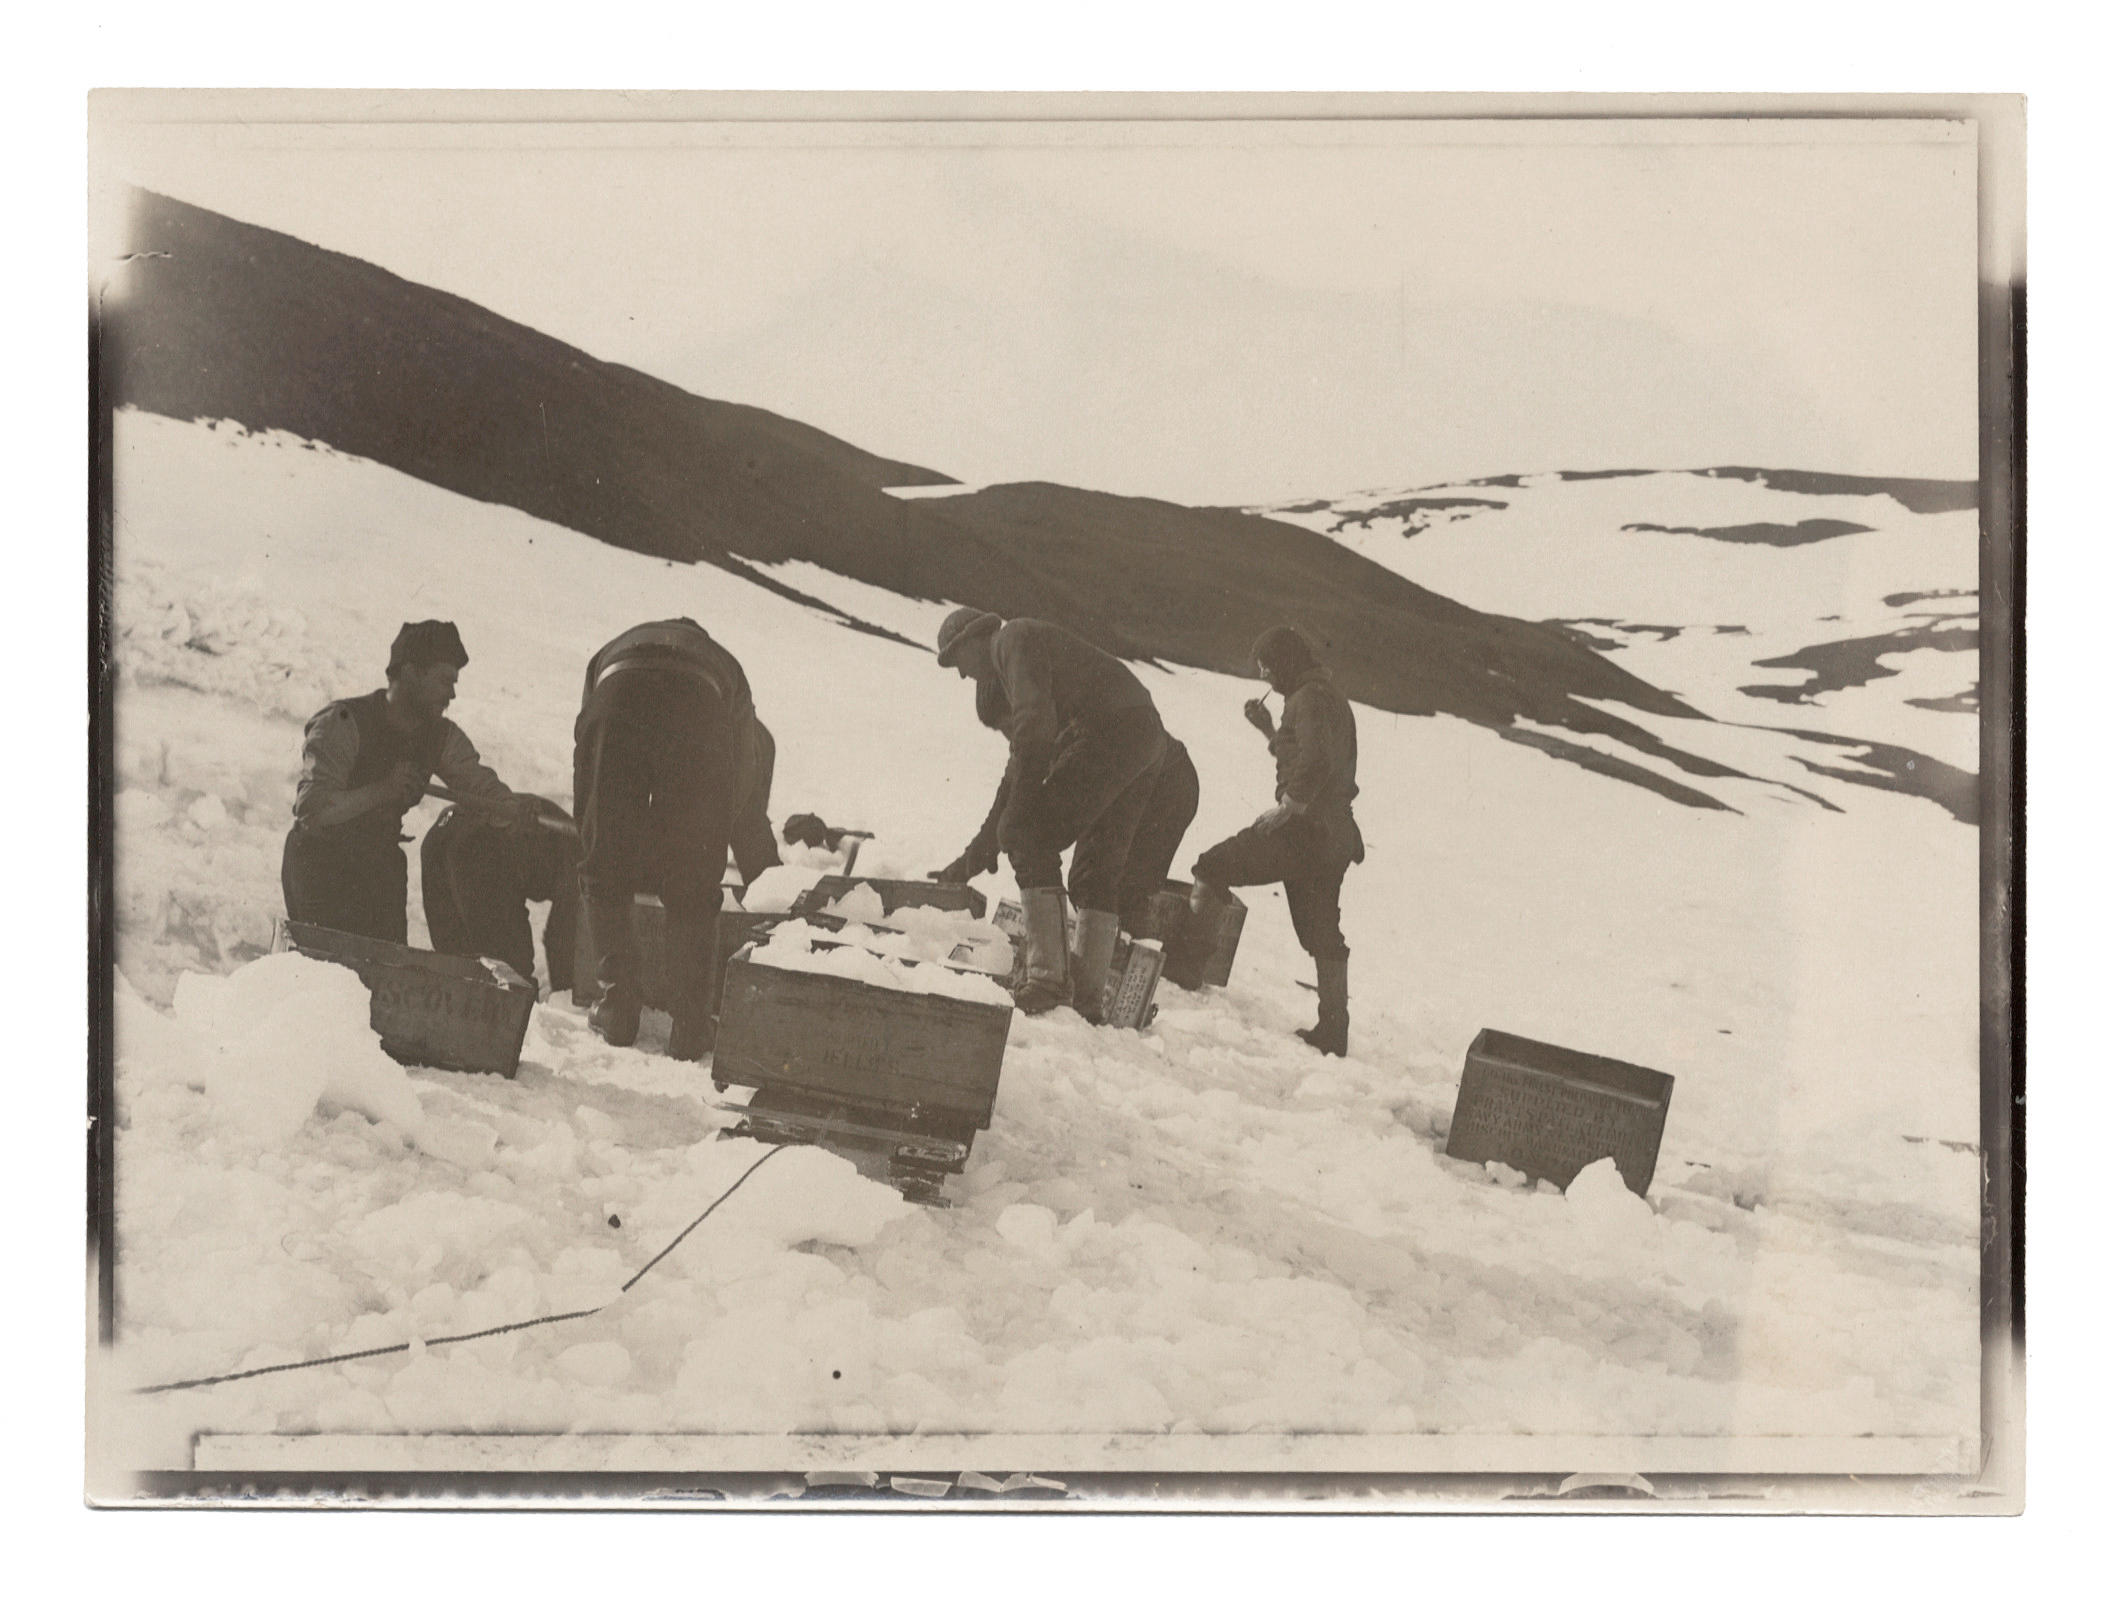 Antarctic Journals of Reginald Skelton by Reginald William Skelton